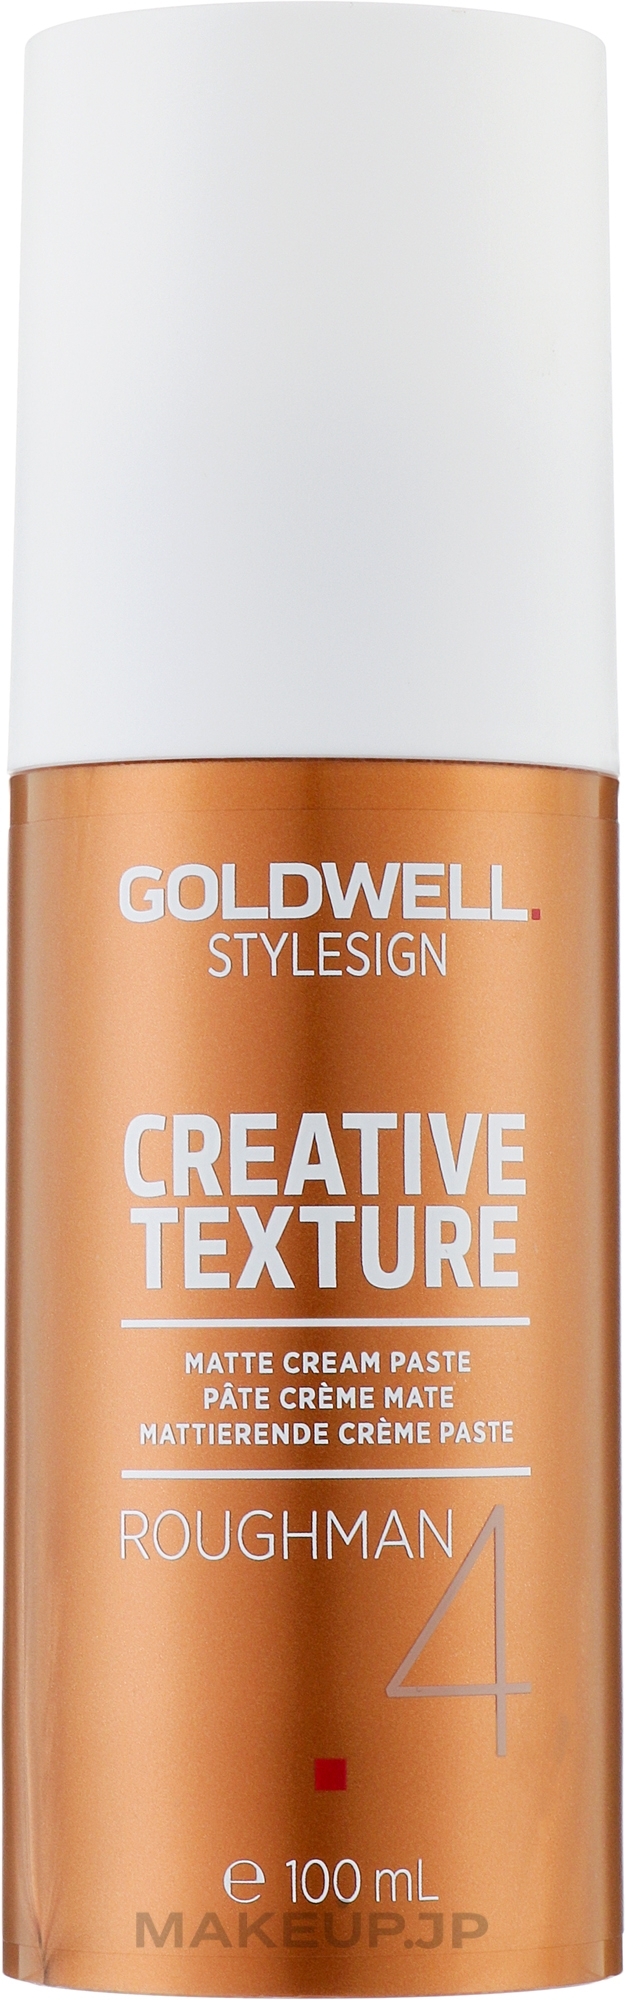 Matte Hair Cream Paste - Goldwell Style Sign Creative Texture Roughman Matte Cream Paste — photo 100 ml